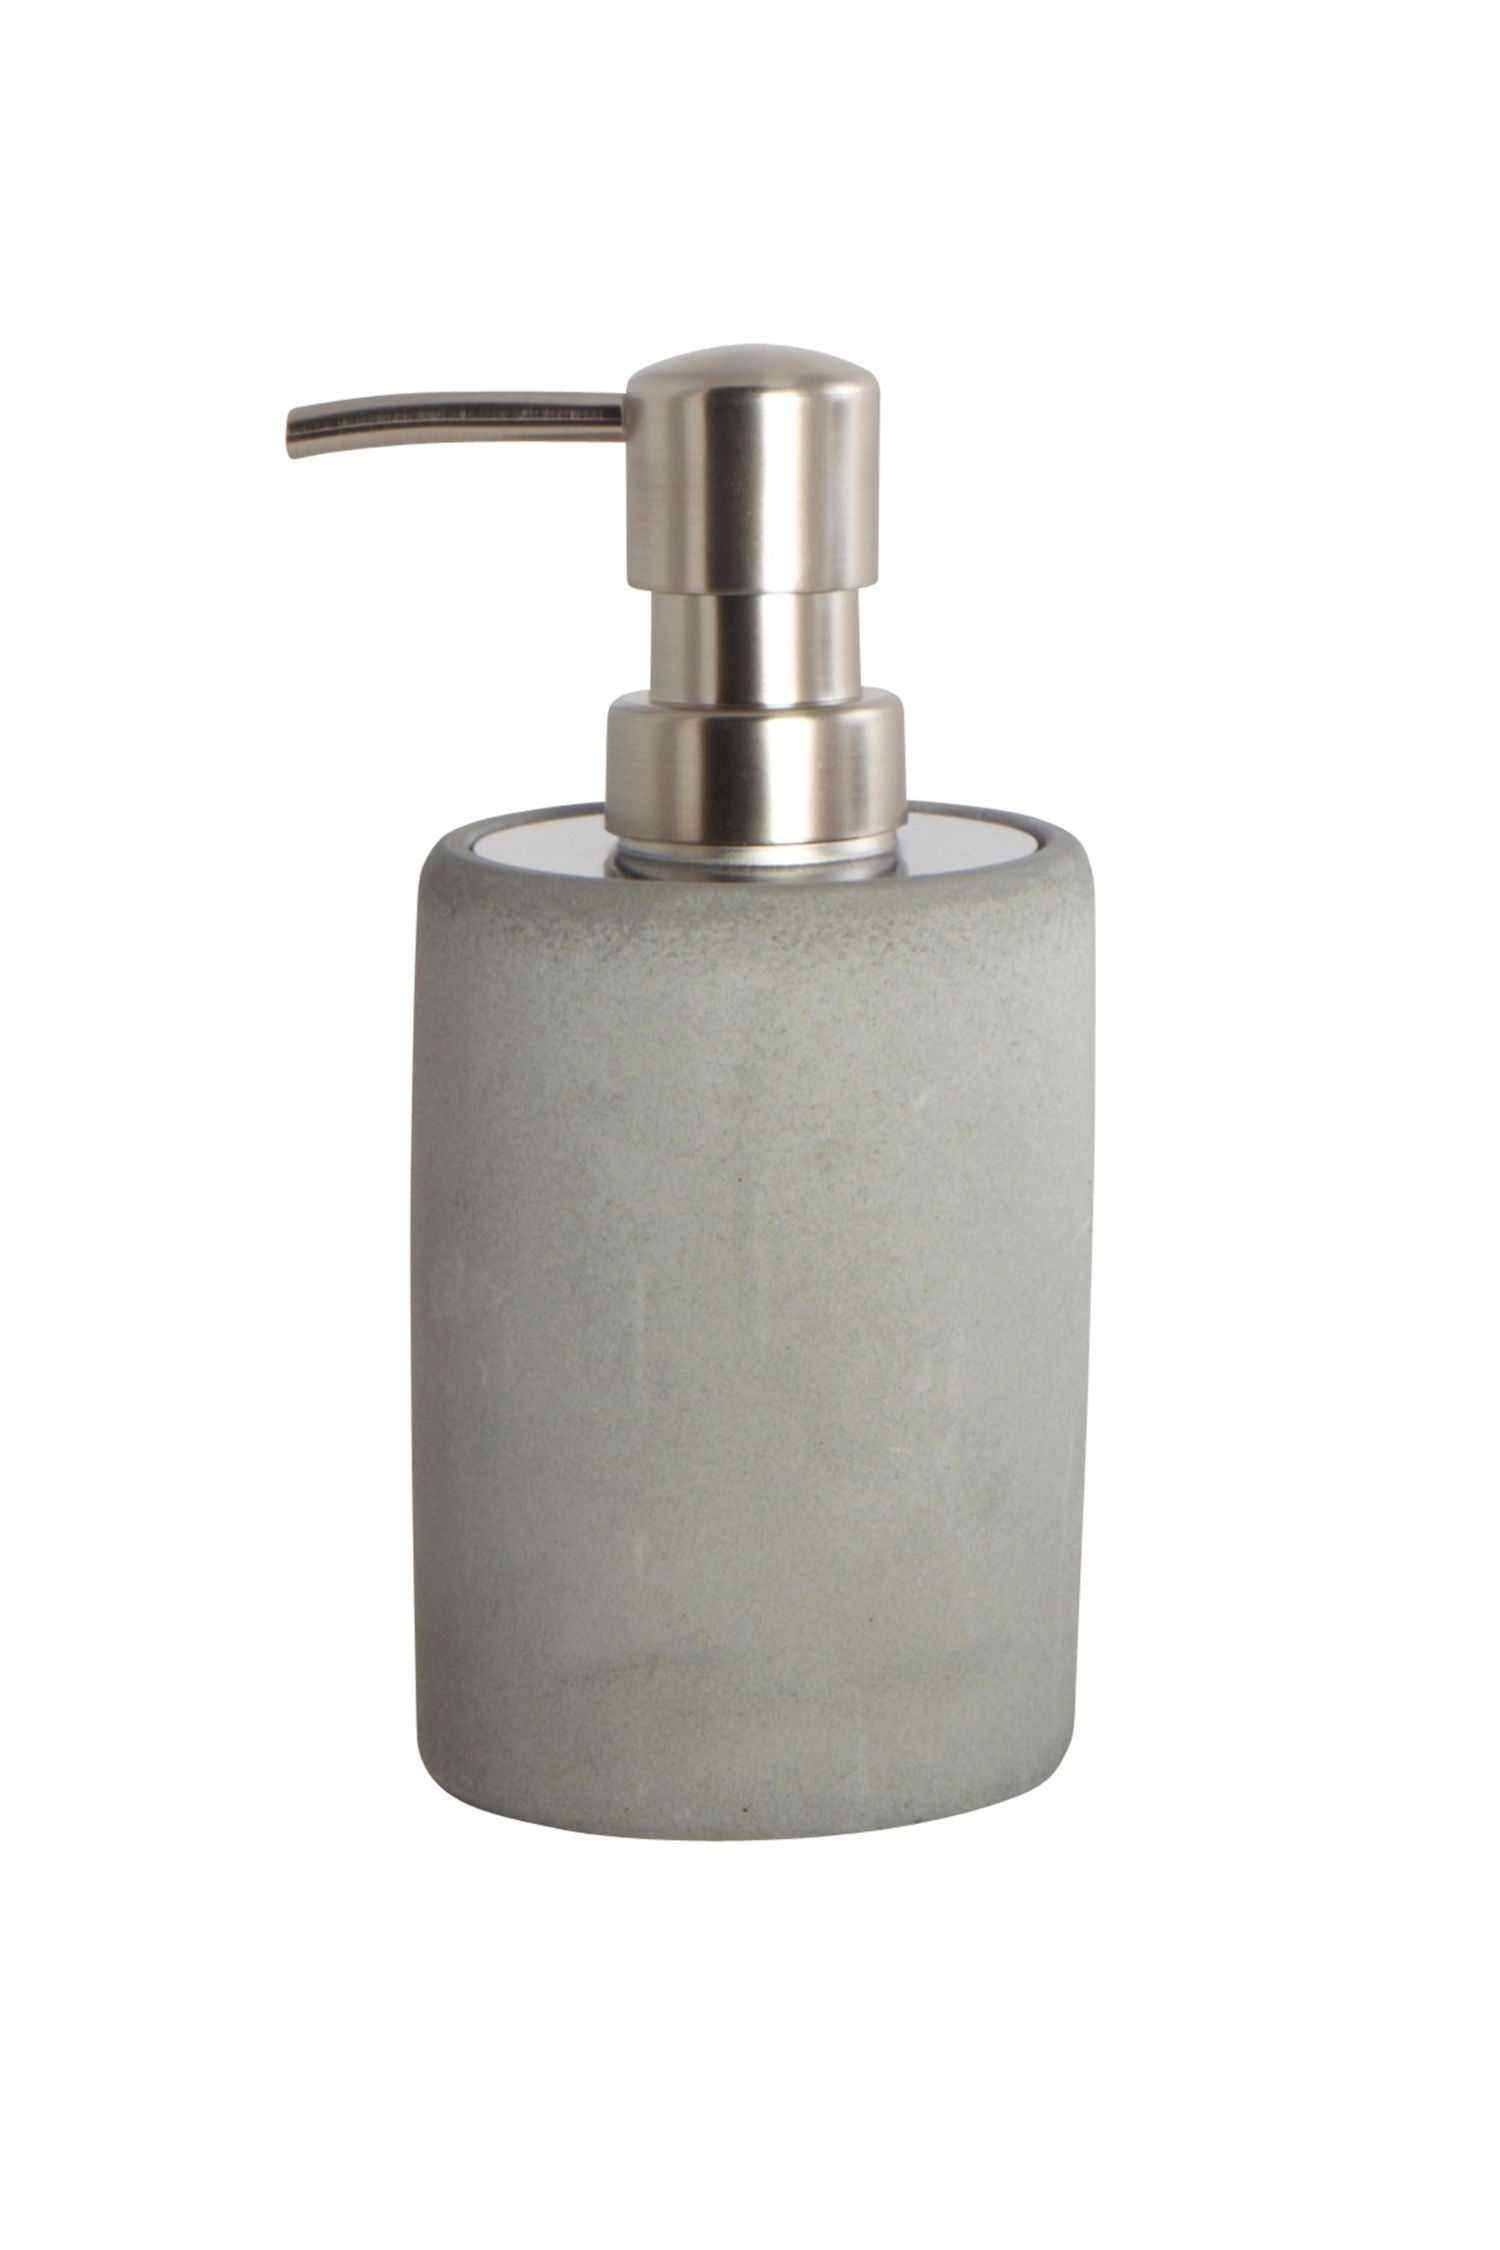 cement soap dispenser